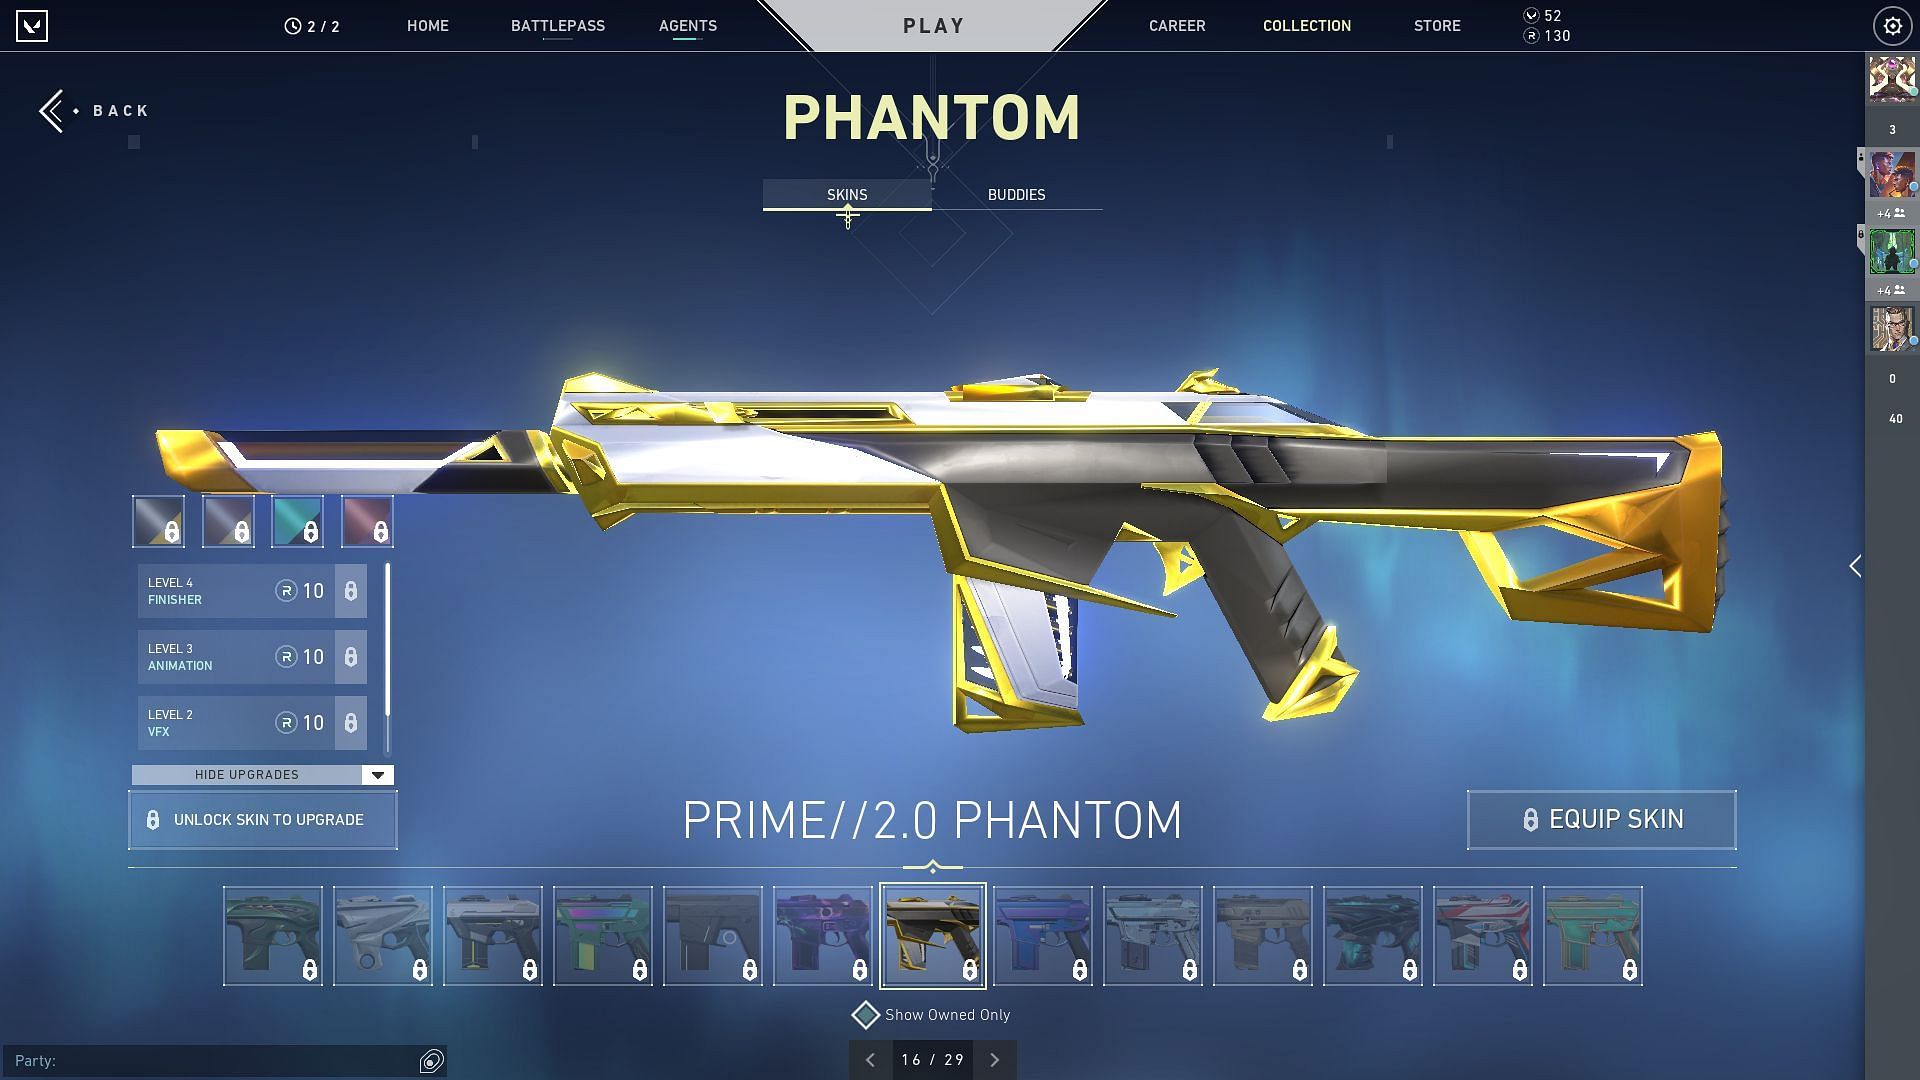 Prime 2.0 bundle contains skins for Phantom, Frenzy, Bucky, Odin, Karambit (Image via Sportskeeda)